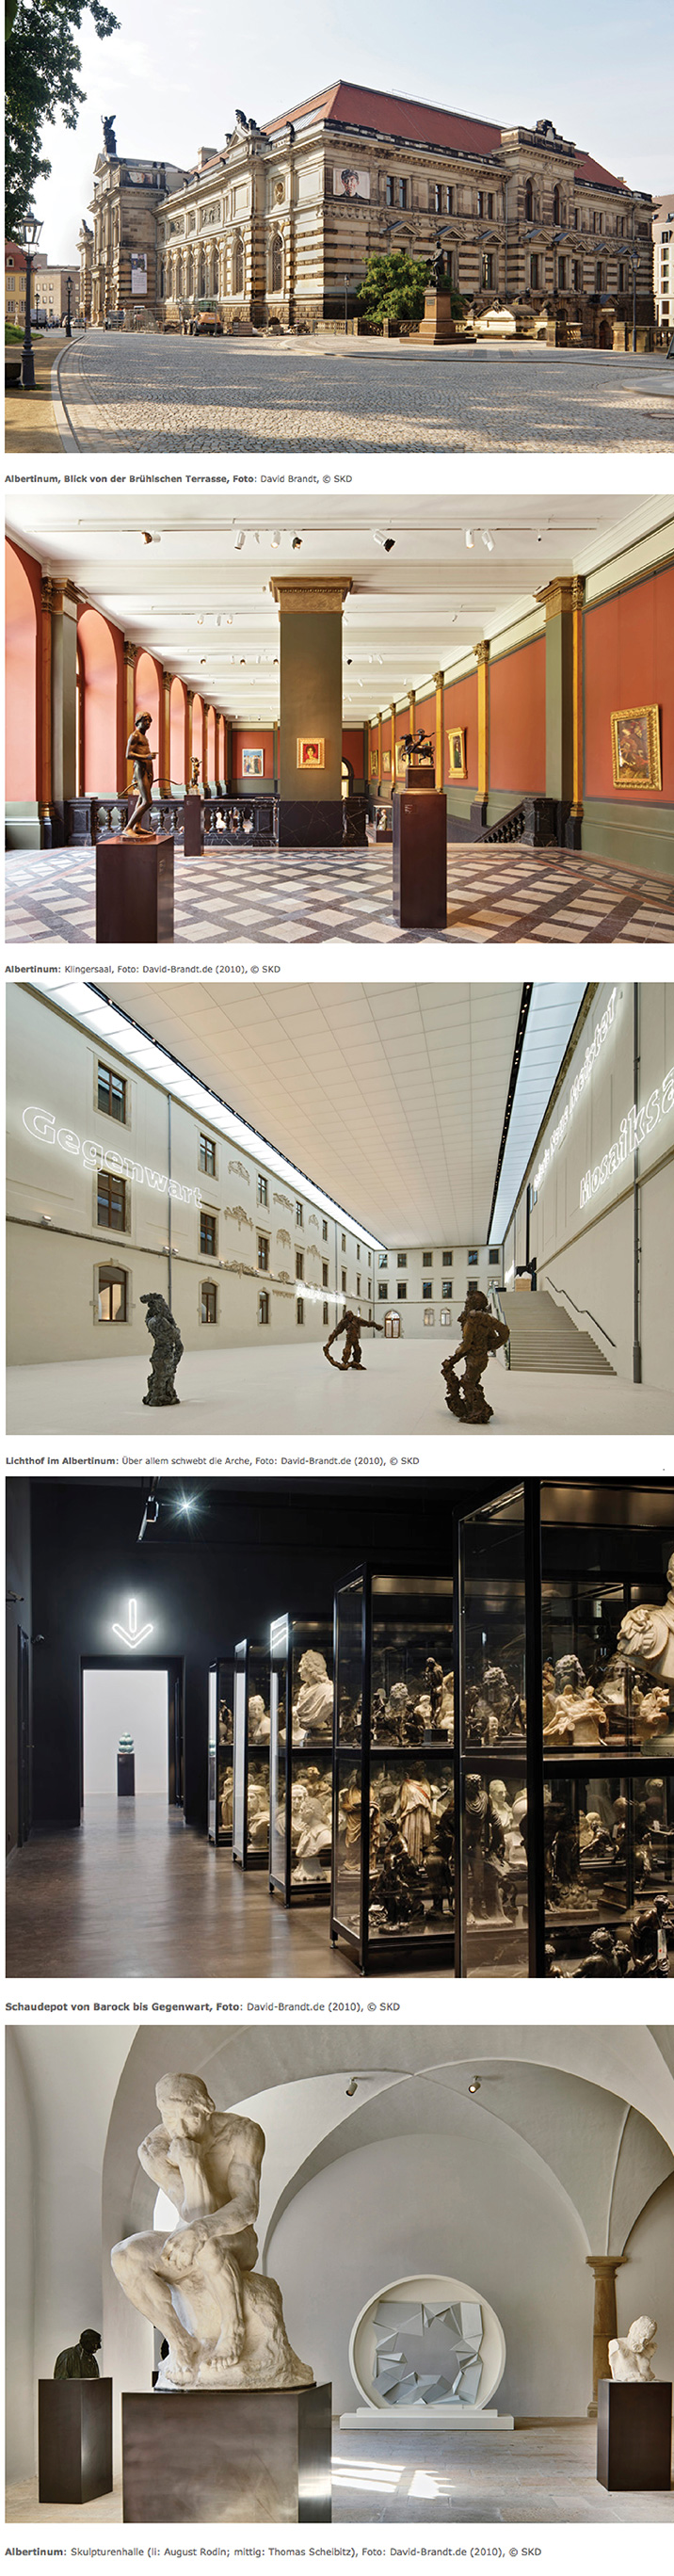 Official photos of the Albertinum Museum • Staatliche Kunstsammlung Dresden • by David Brandt